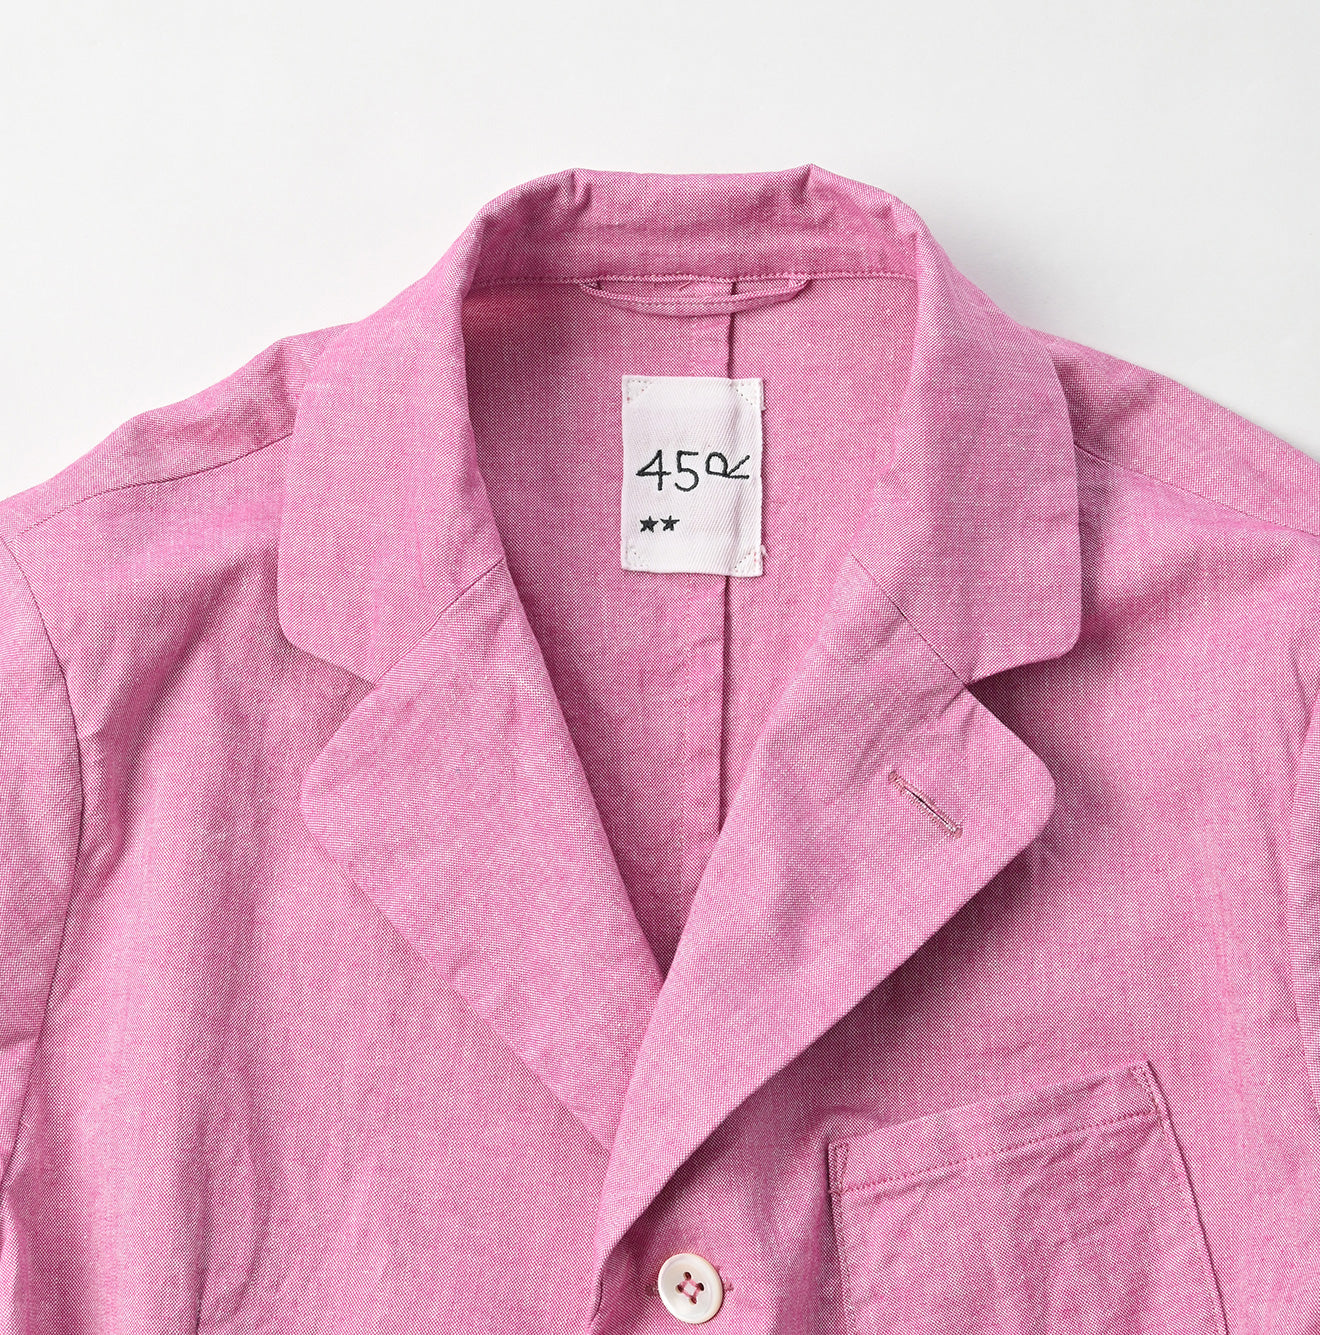 45R Cotton Linen Oxford Stretch Shirt Jacket